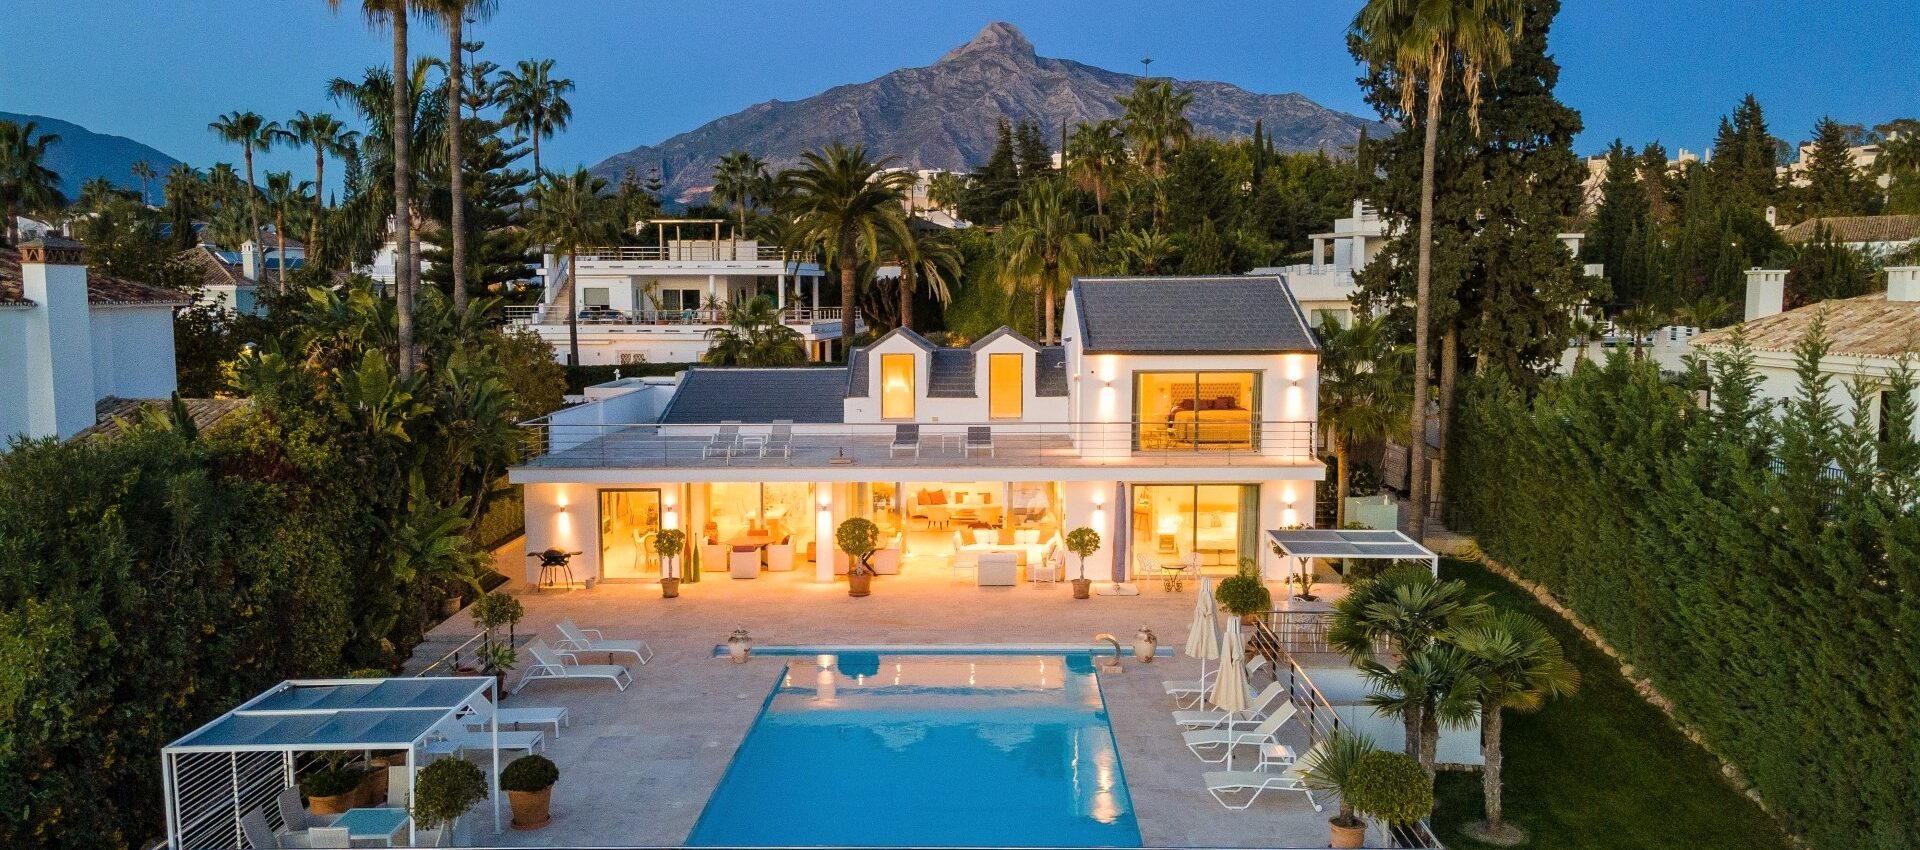 Elegant villa directly on one of the most prestigious golf courses in Marbella